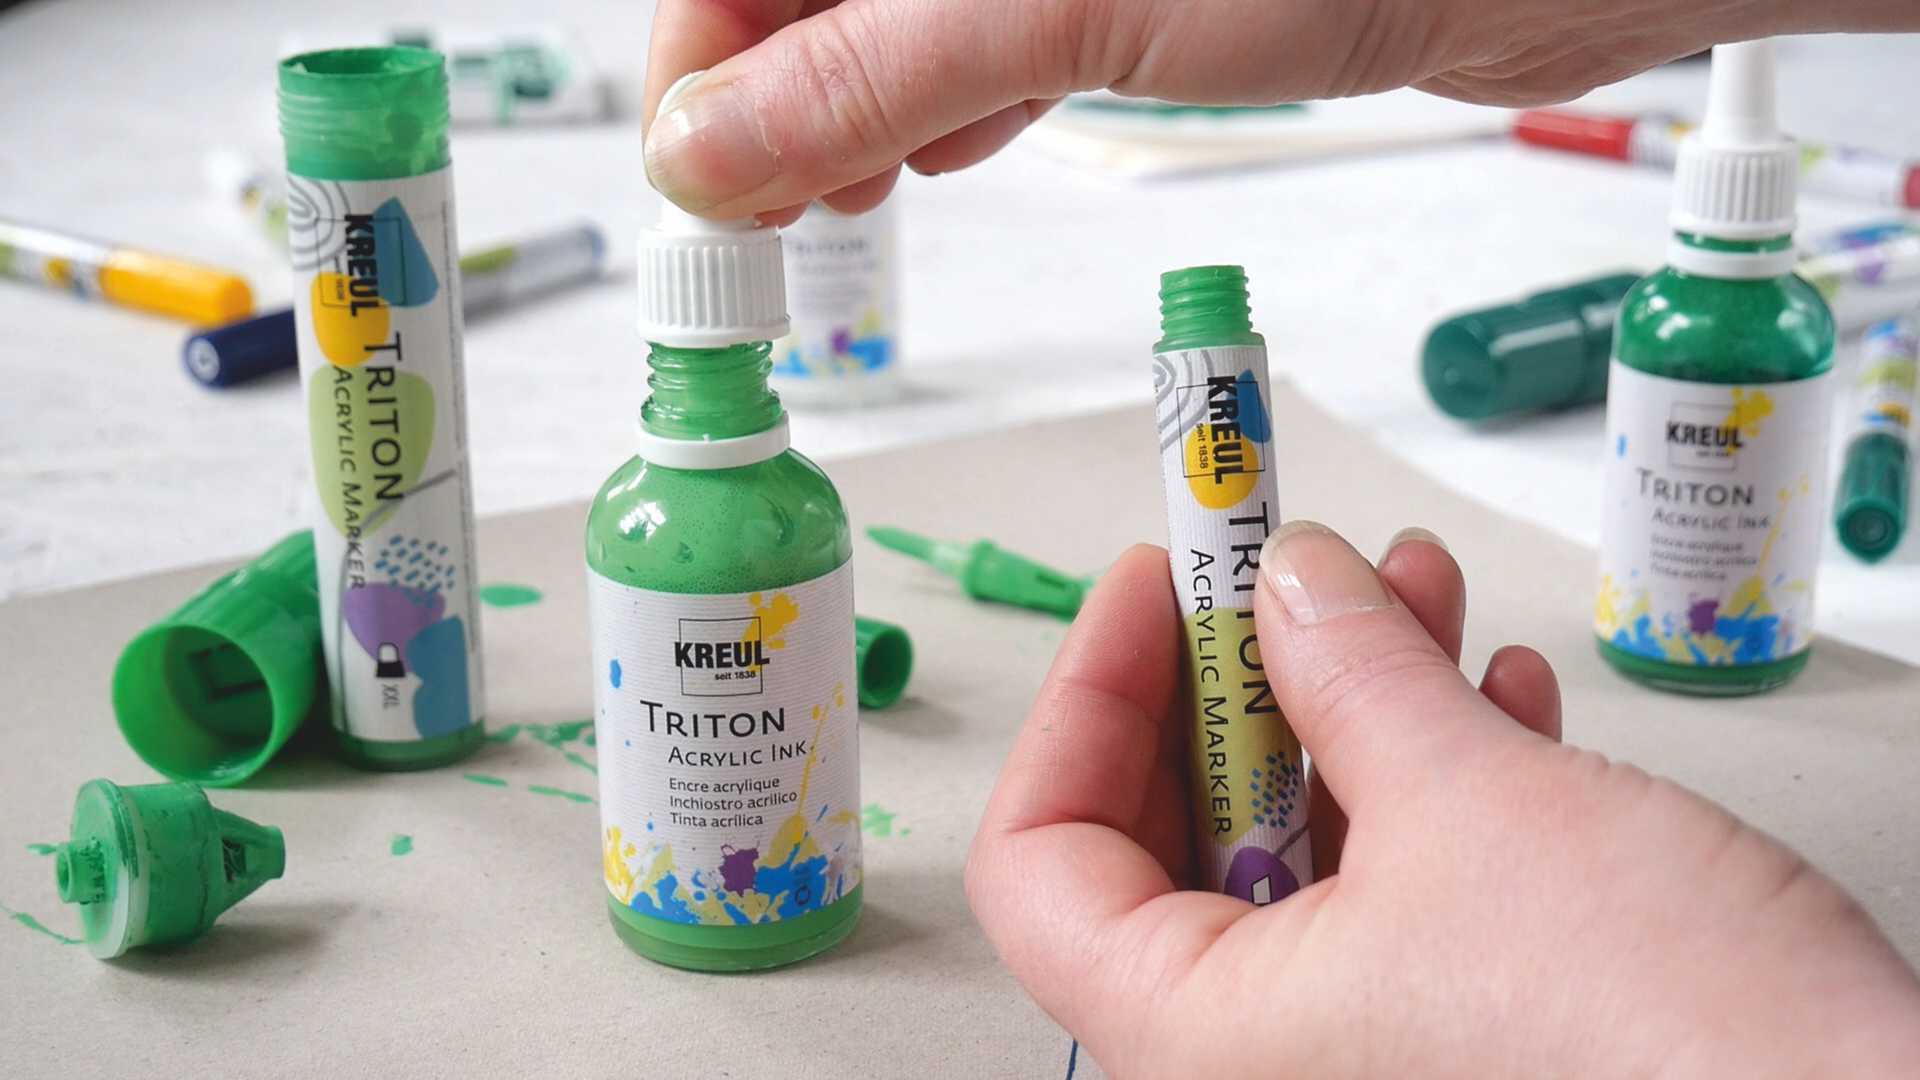 KREUL Triton Acrylic Marker Acrylmarker wieder befüllen auffüllen selber machen